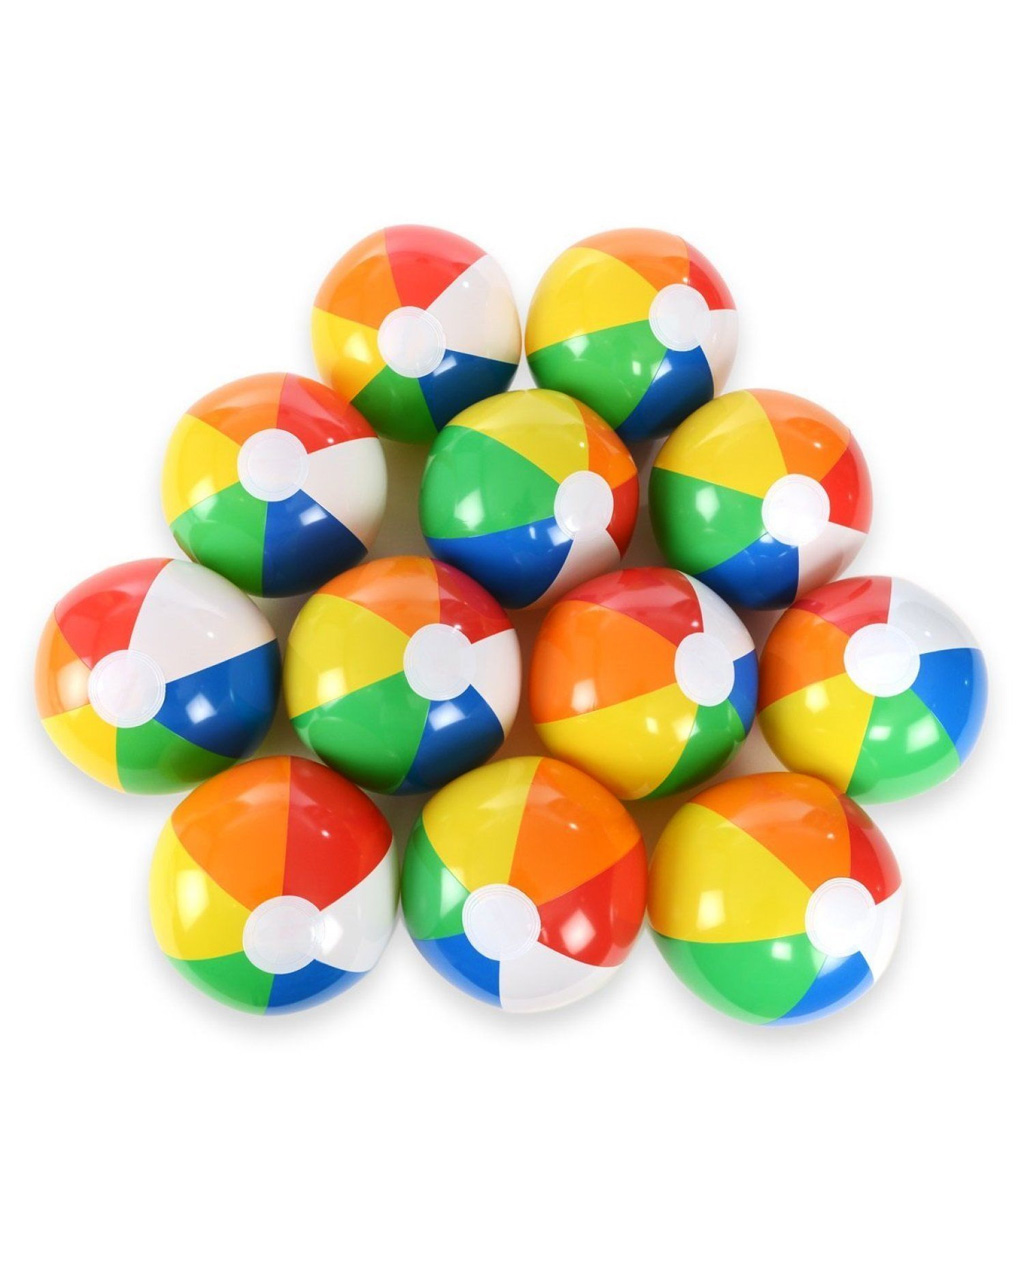 Aoile Rainbow Beach Ball 9 Rainbow Colored Party Pack Inflatable Beach Balls 